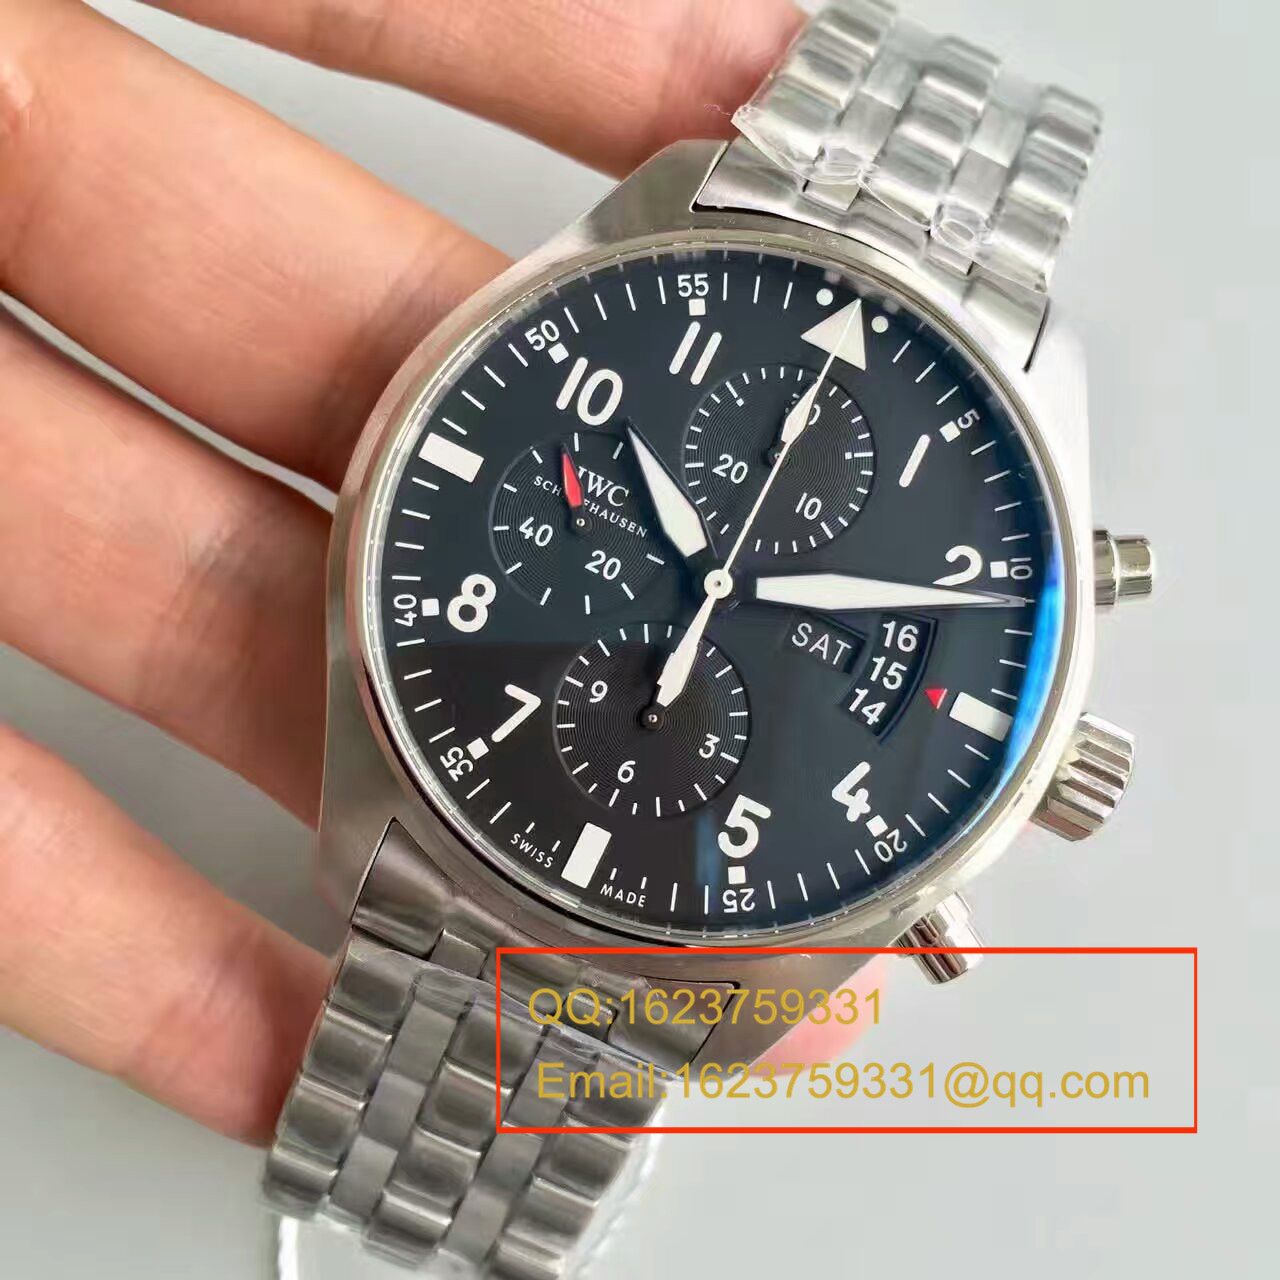 【ZF厂1:1超A精仿手表】万国飞行员CHRONOGRAPH计时腕表系列 IW377704腕表 